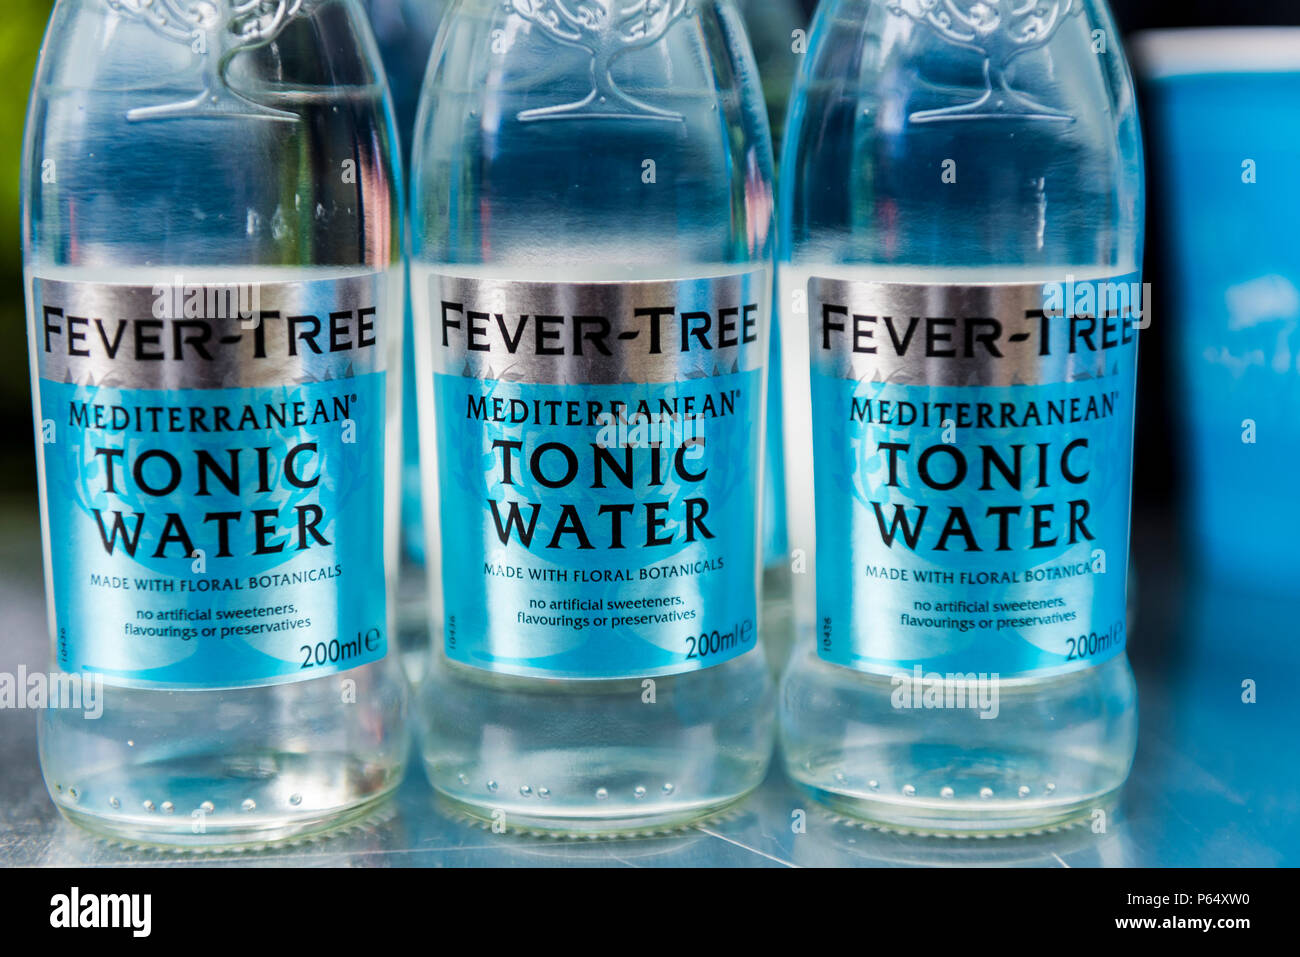 Botellas de agua tónica Fever-Tree. Foto de stock